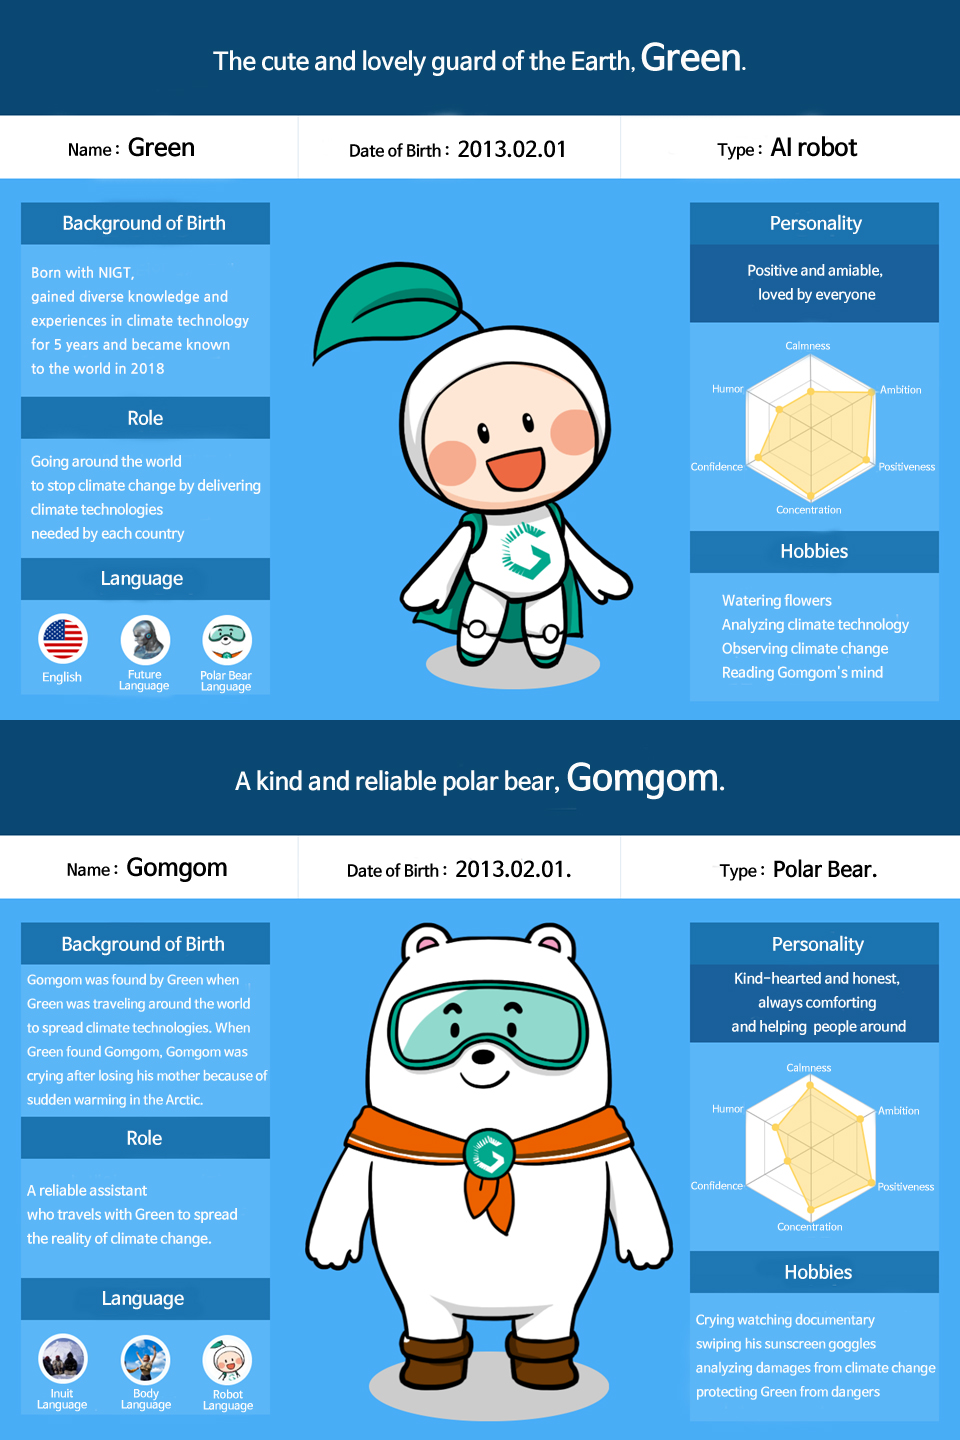 NIGT Character Green & Gomgom profile